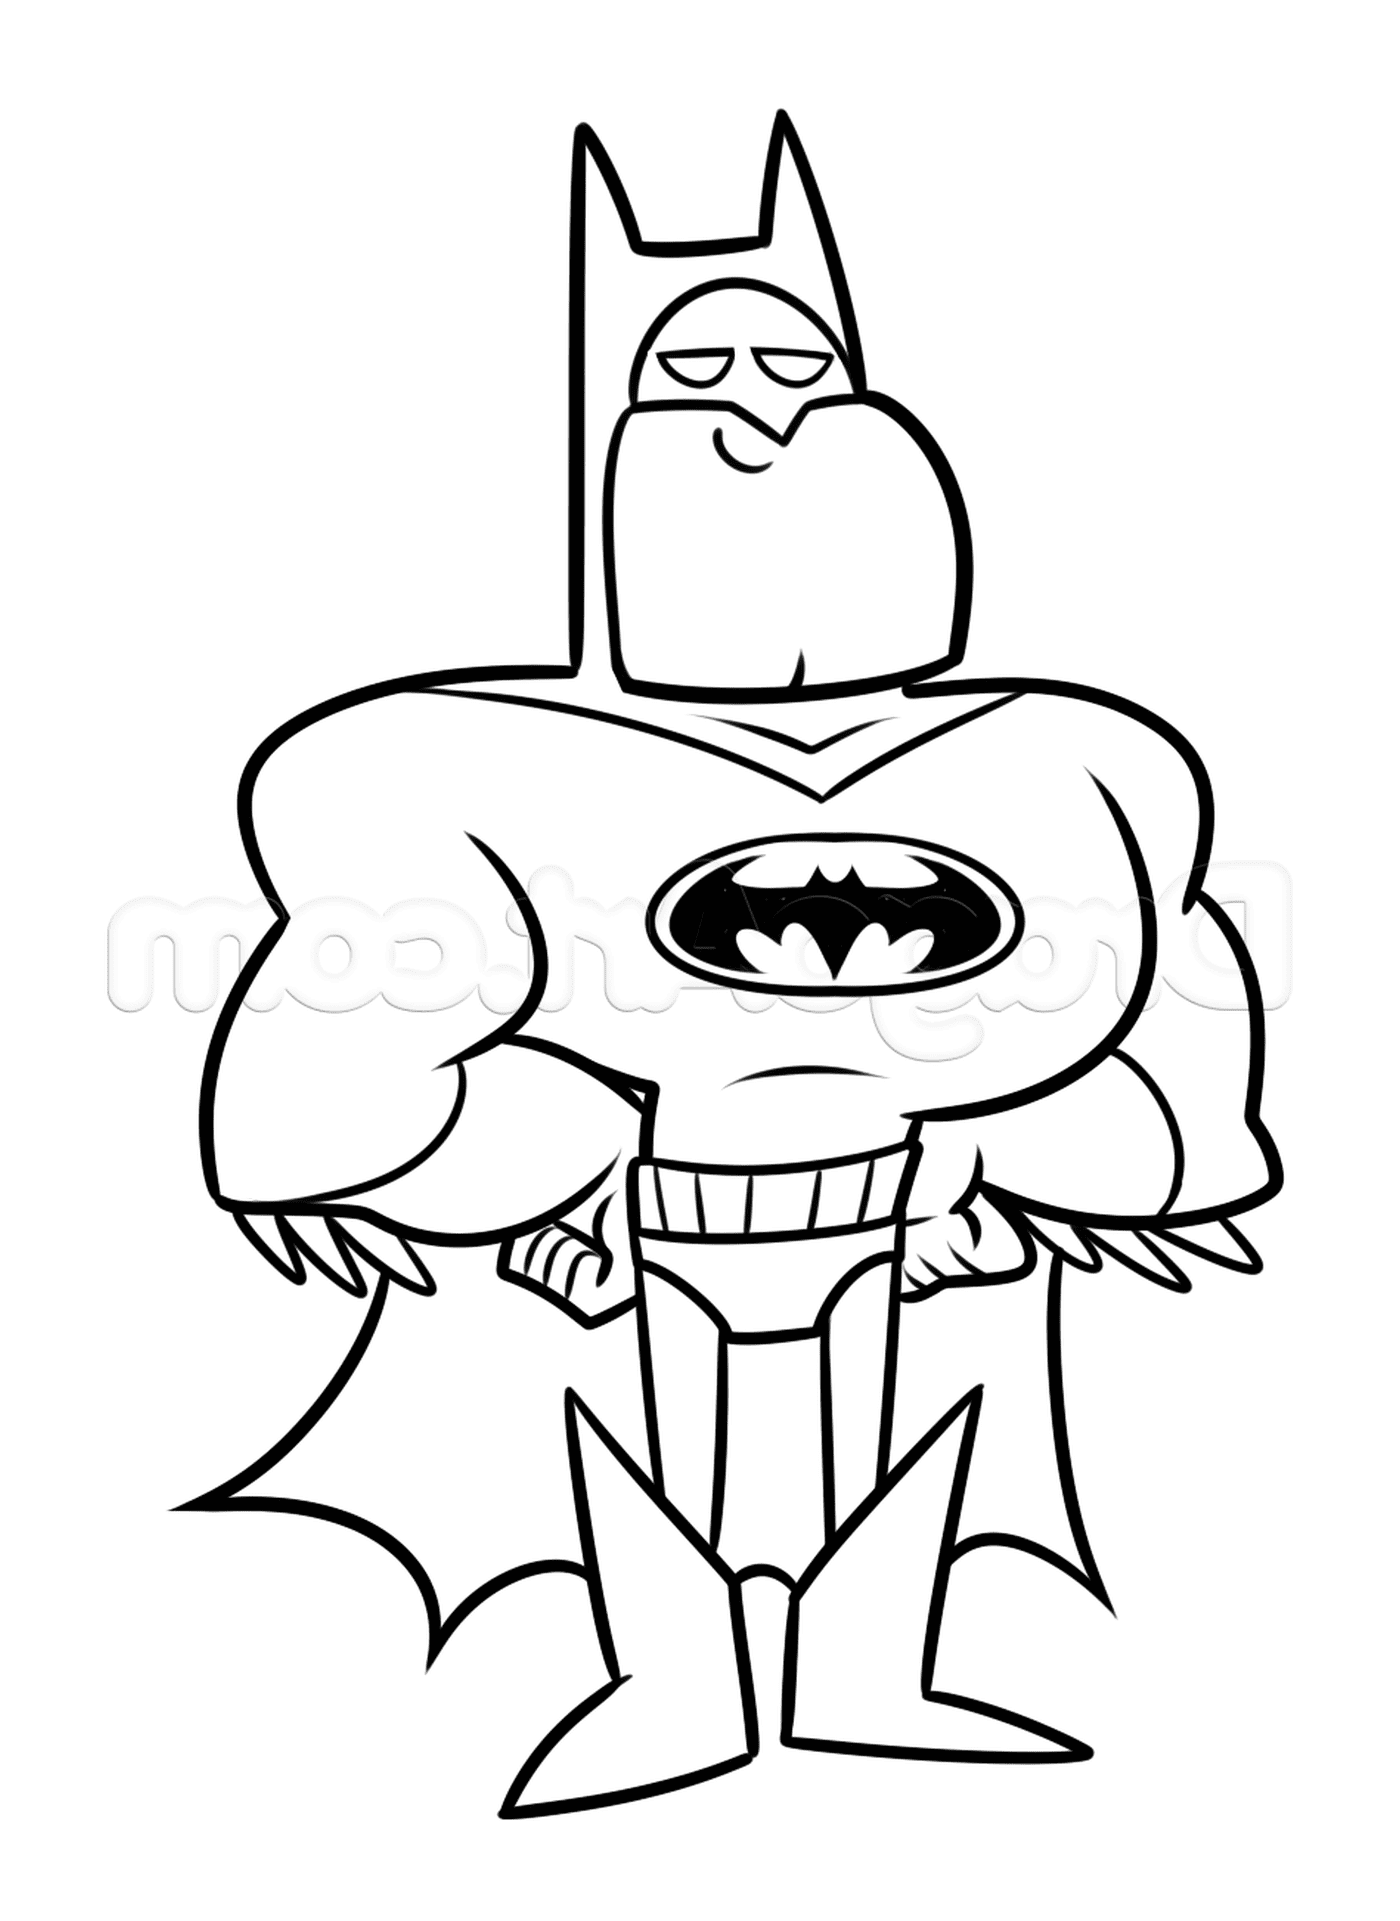   Batman présente dessin animé 